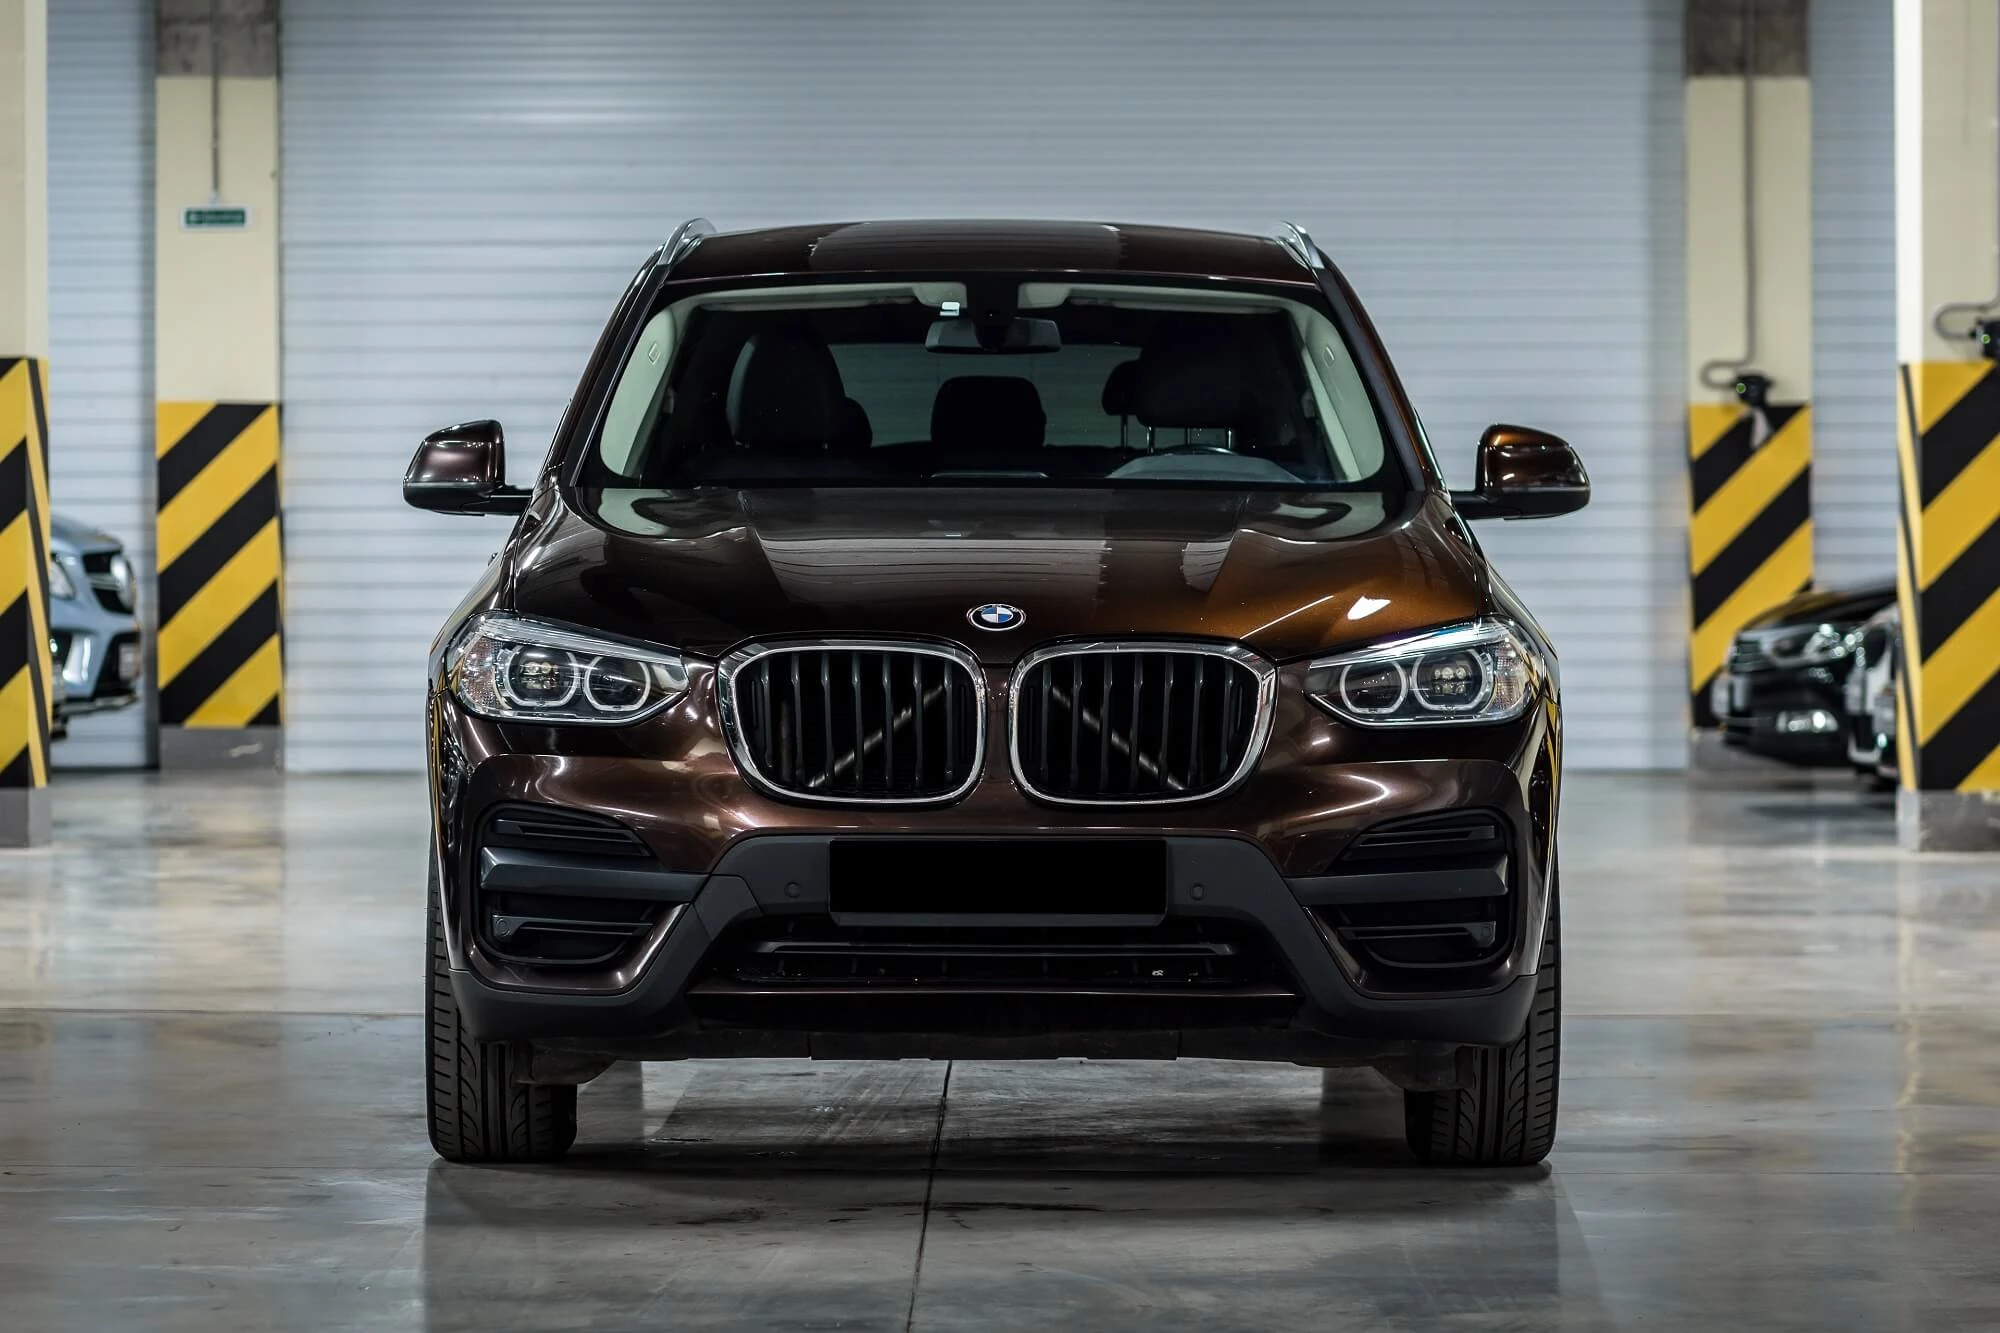 BMW X3 коричневый